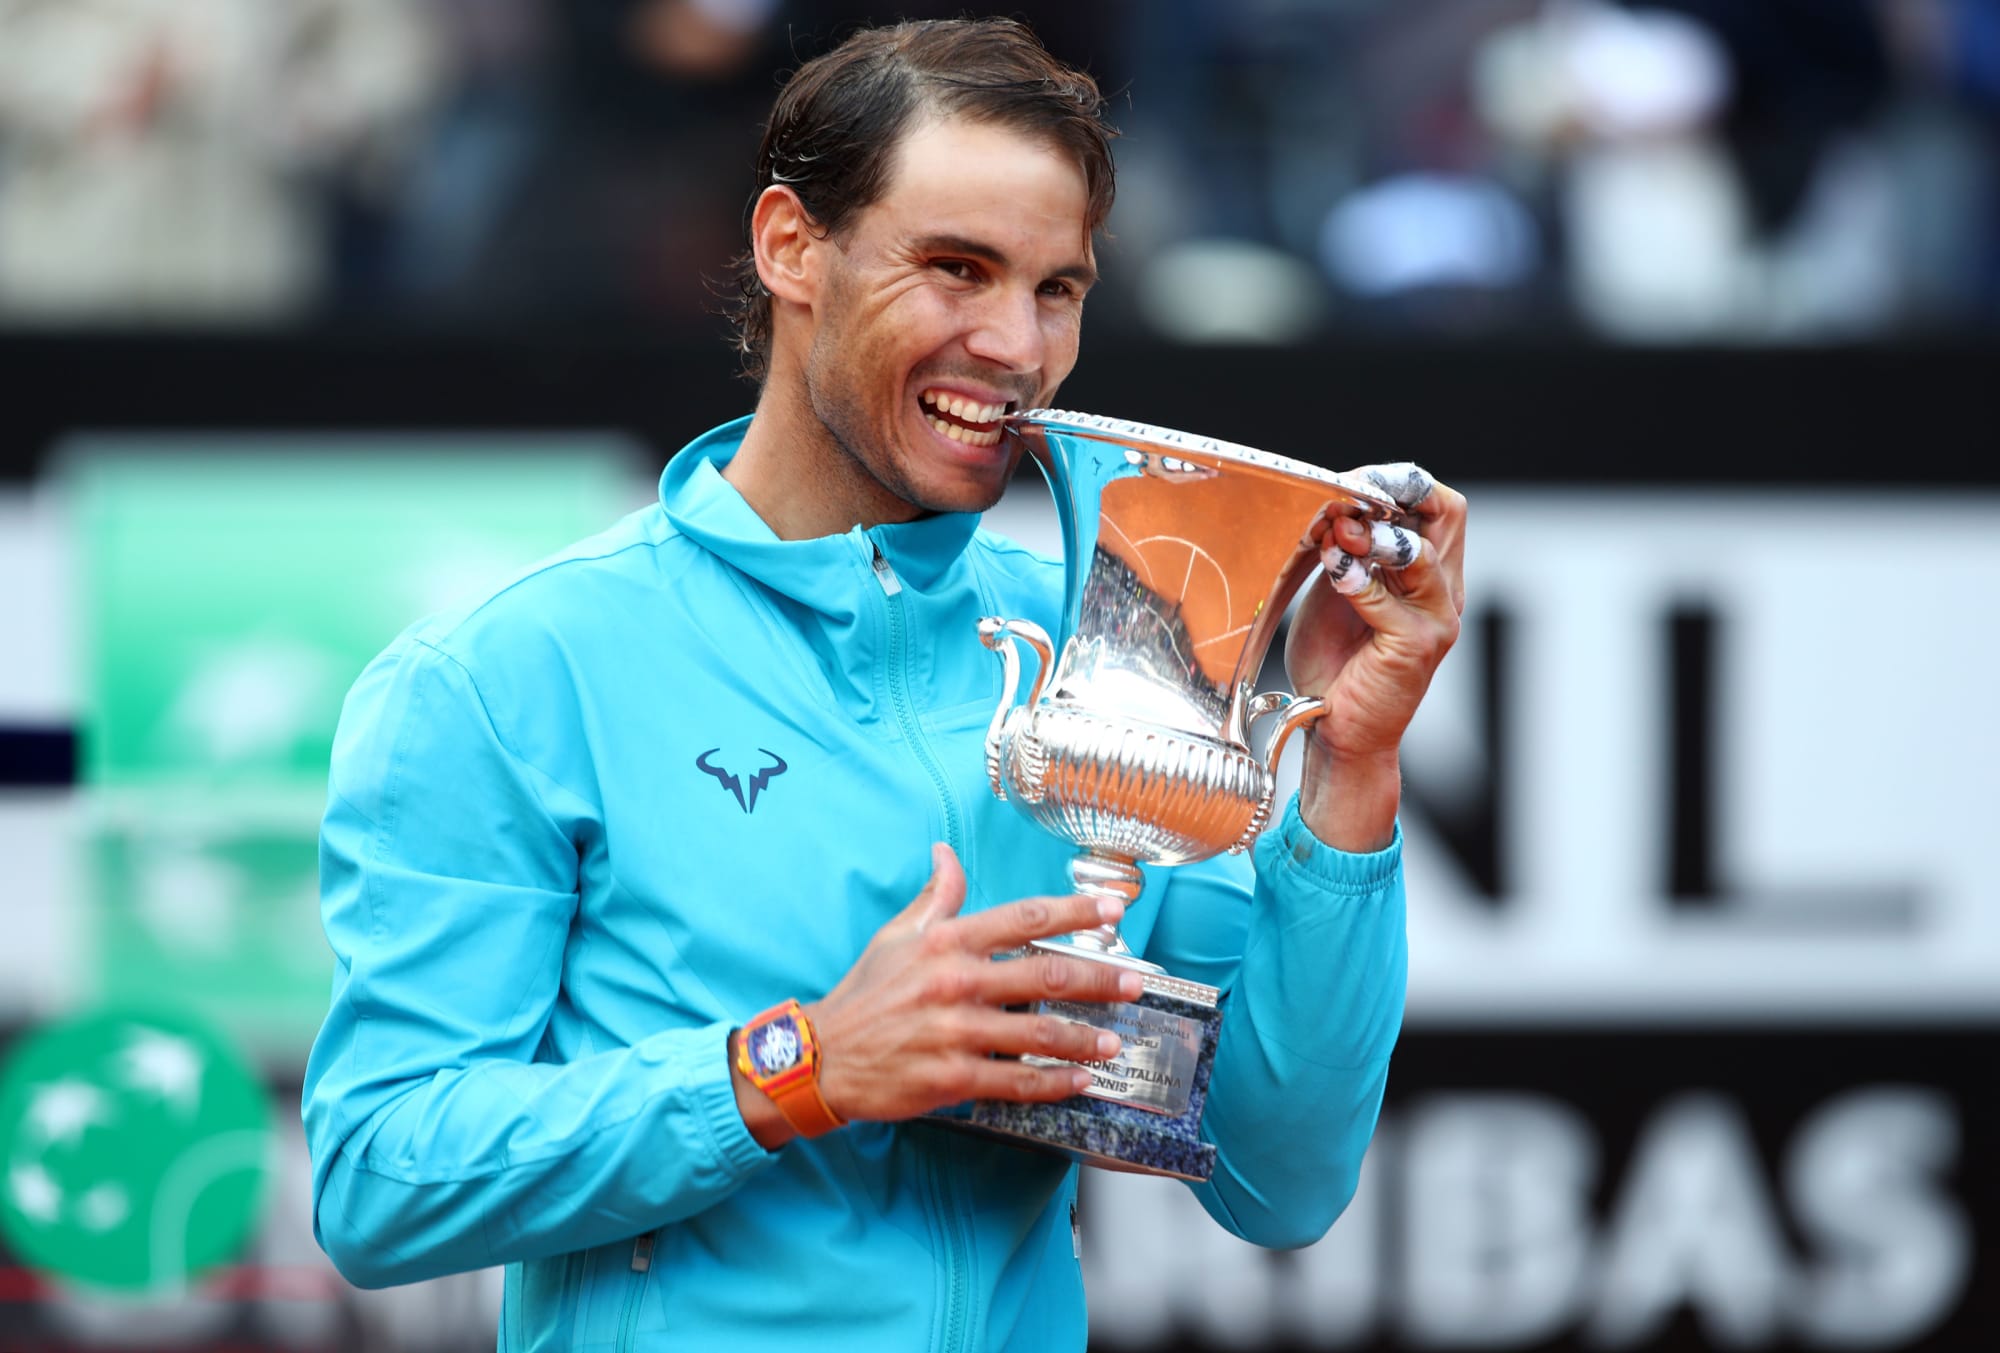 Italian Open Rafael Nadal wins in Rome, is the French Open next?